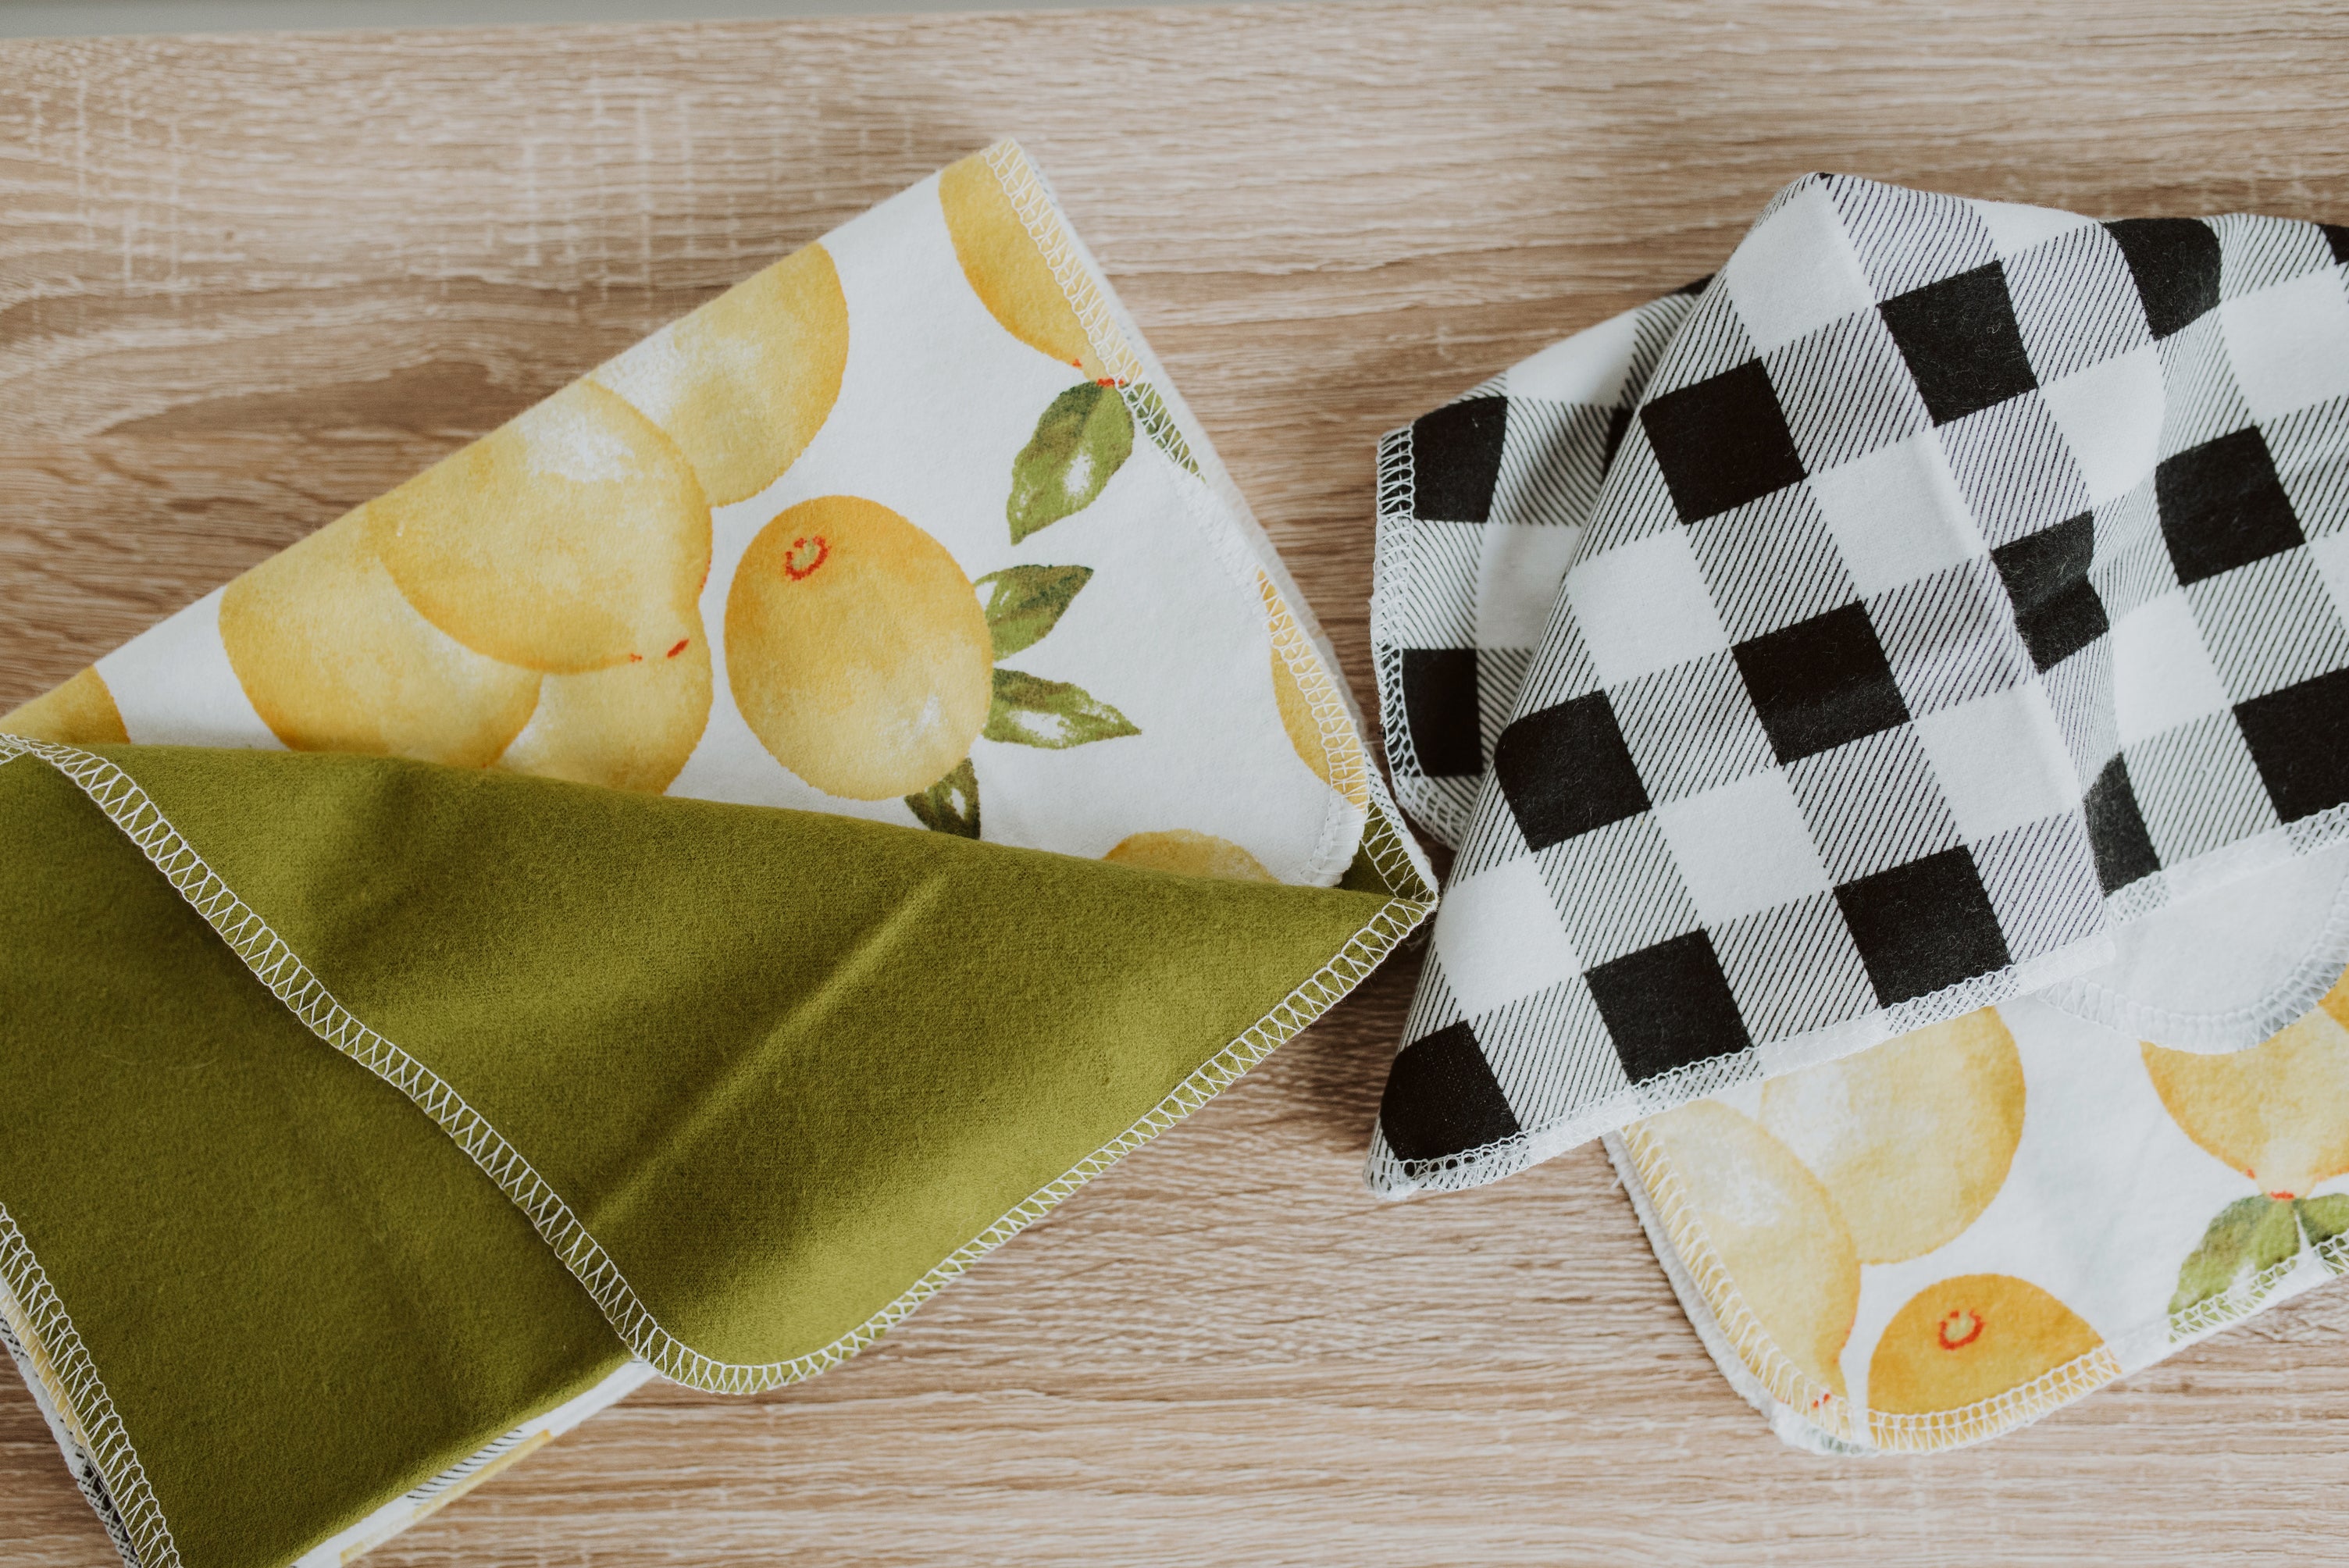 Reusable Swedish Dishcloths - 45 Styles, Sunflower